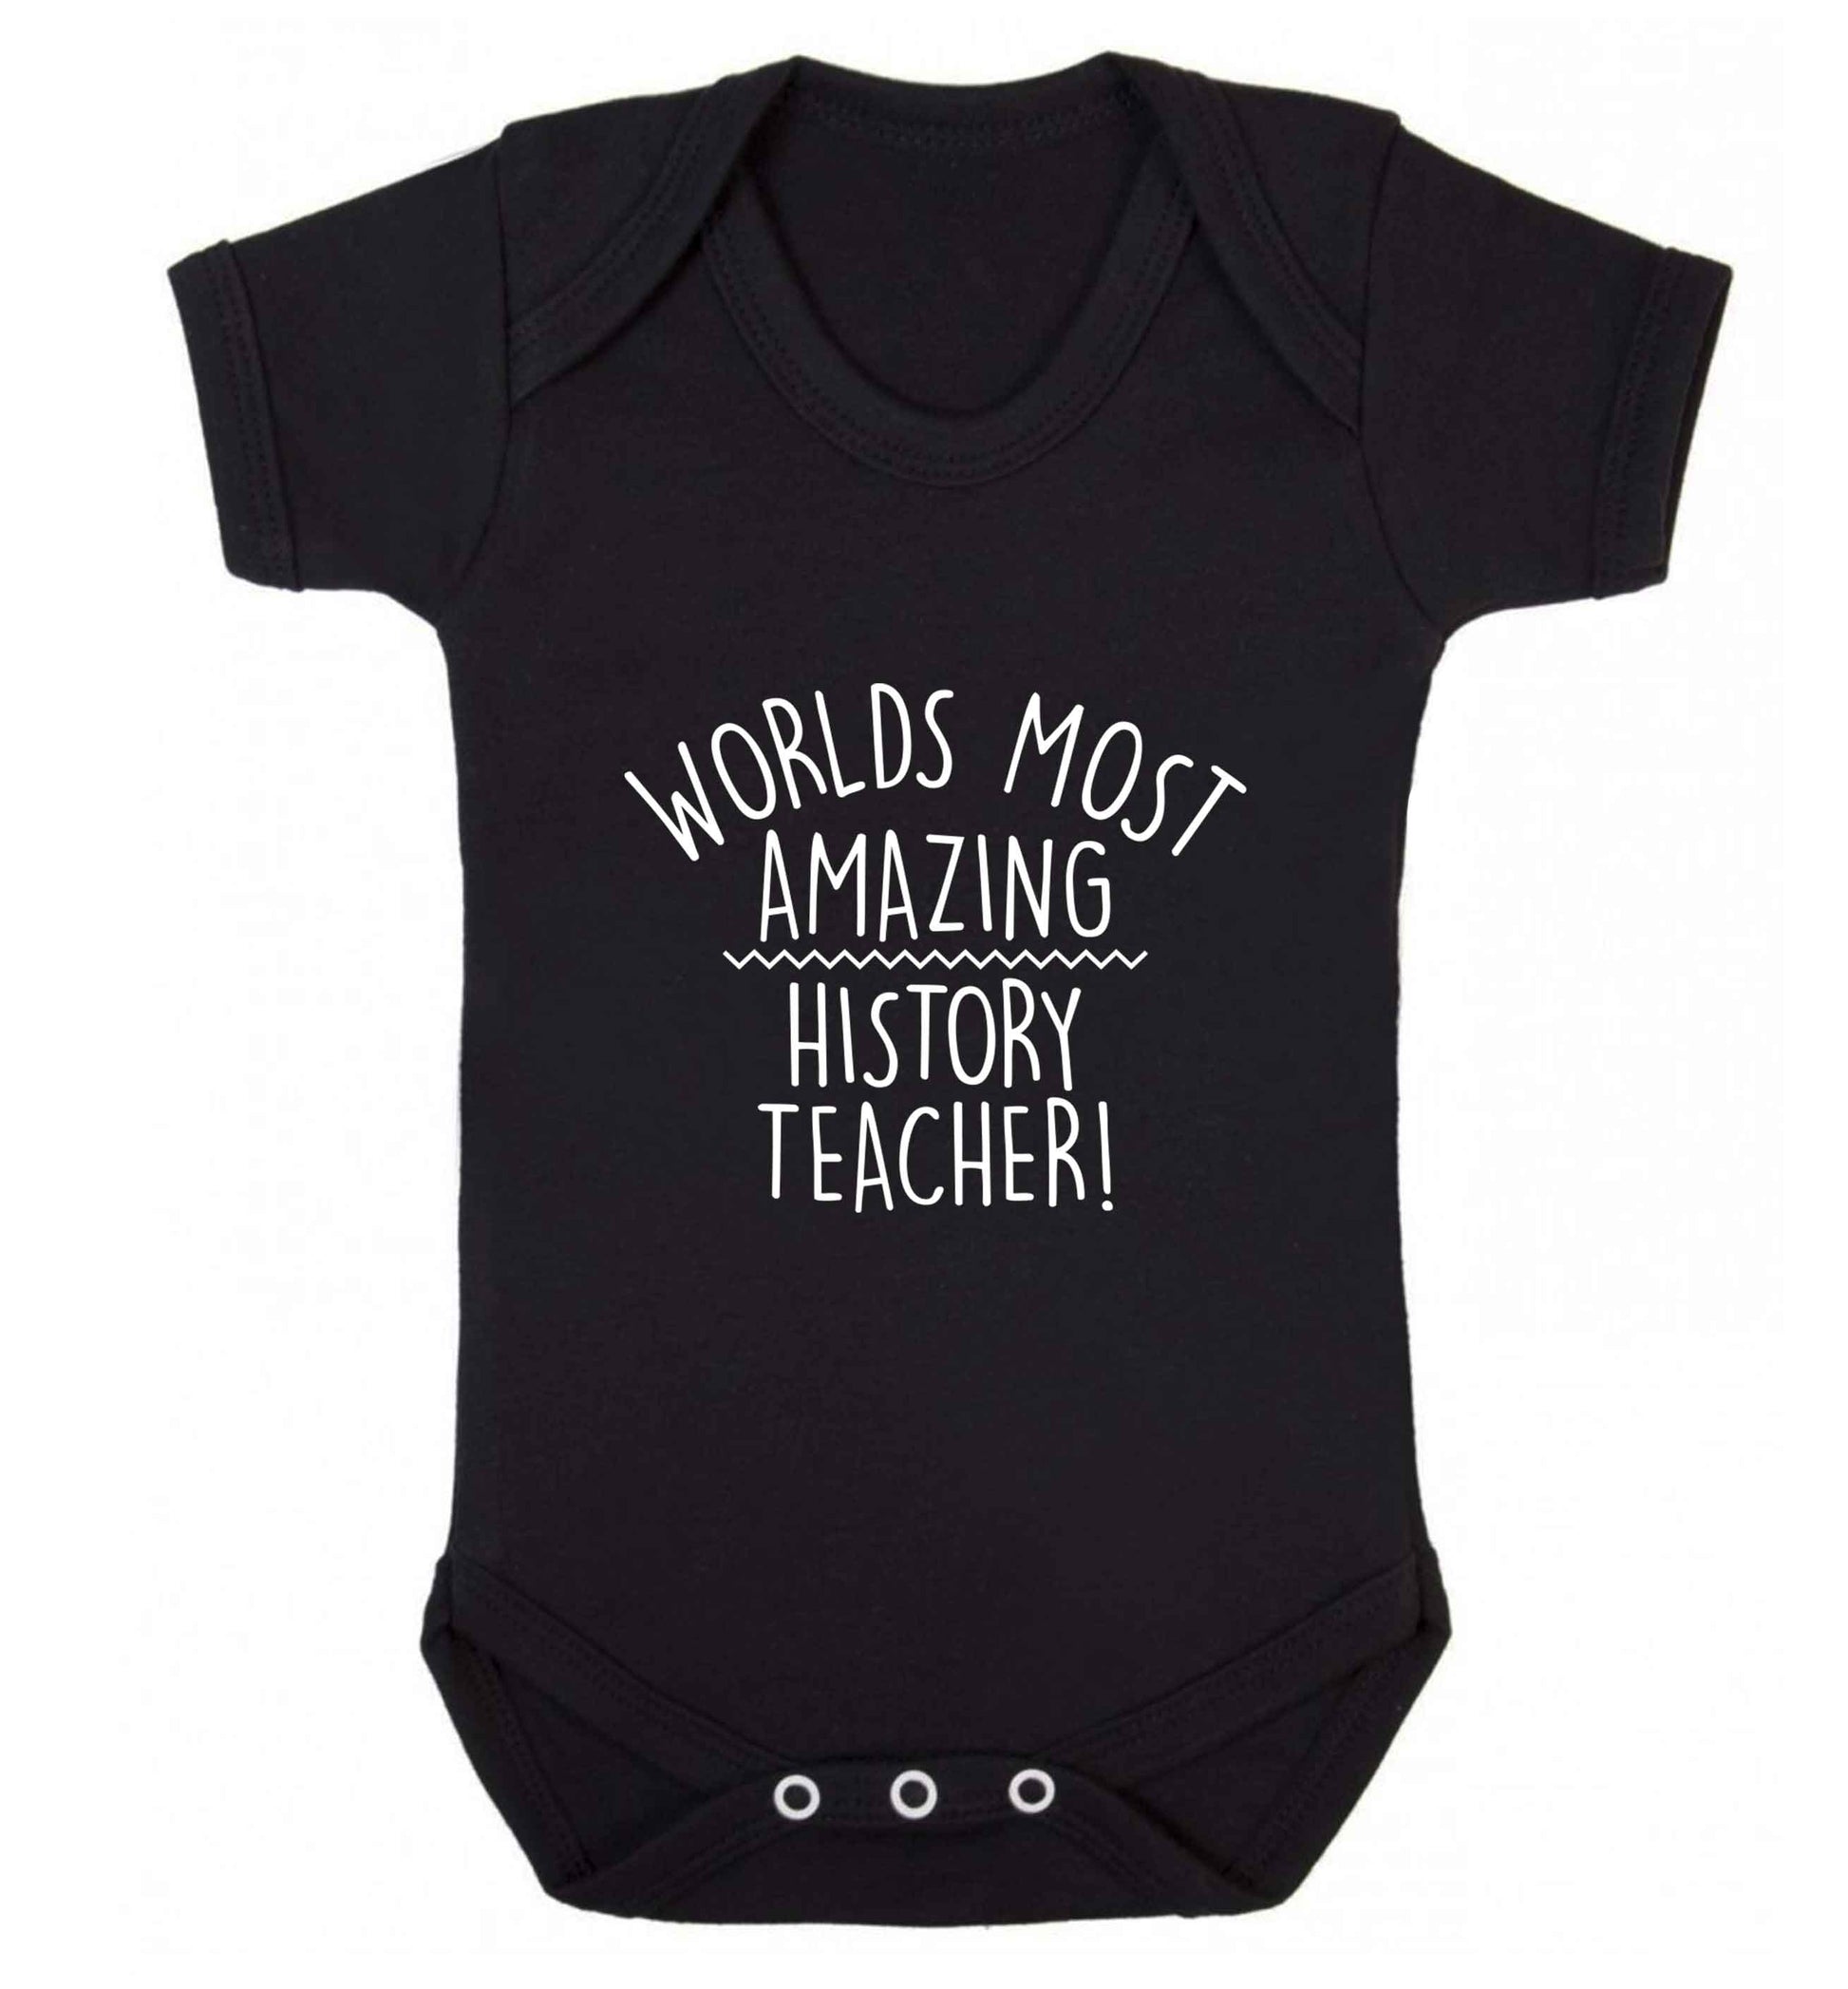 Worlds most amazing History teacher baby vest black 18-24 months